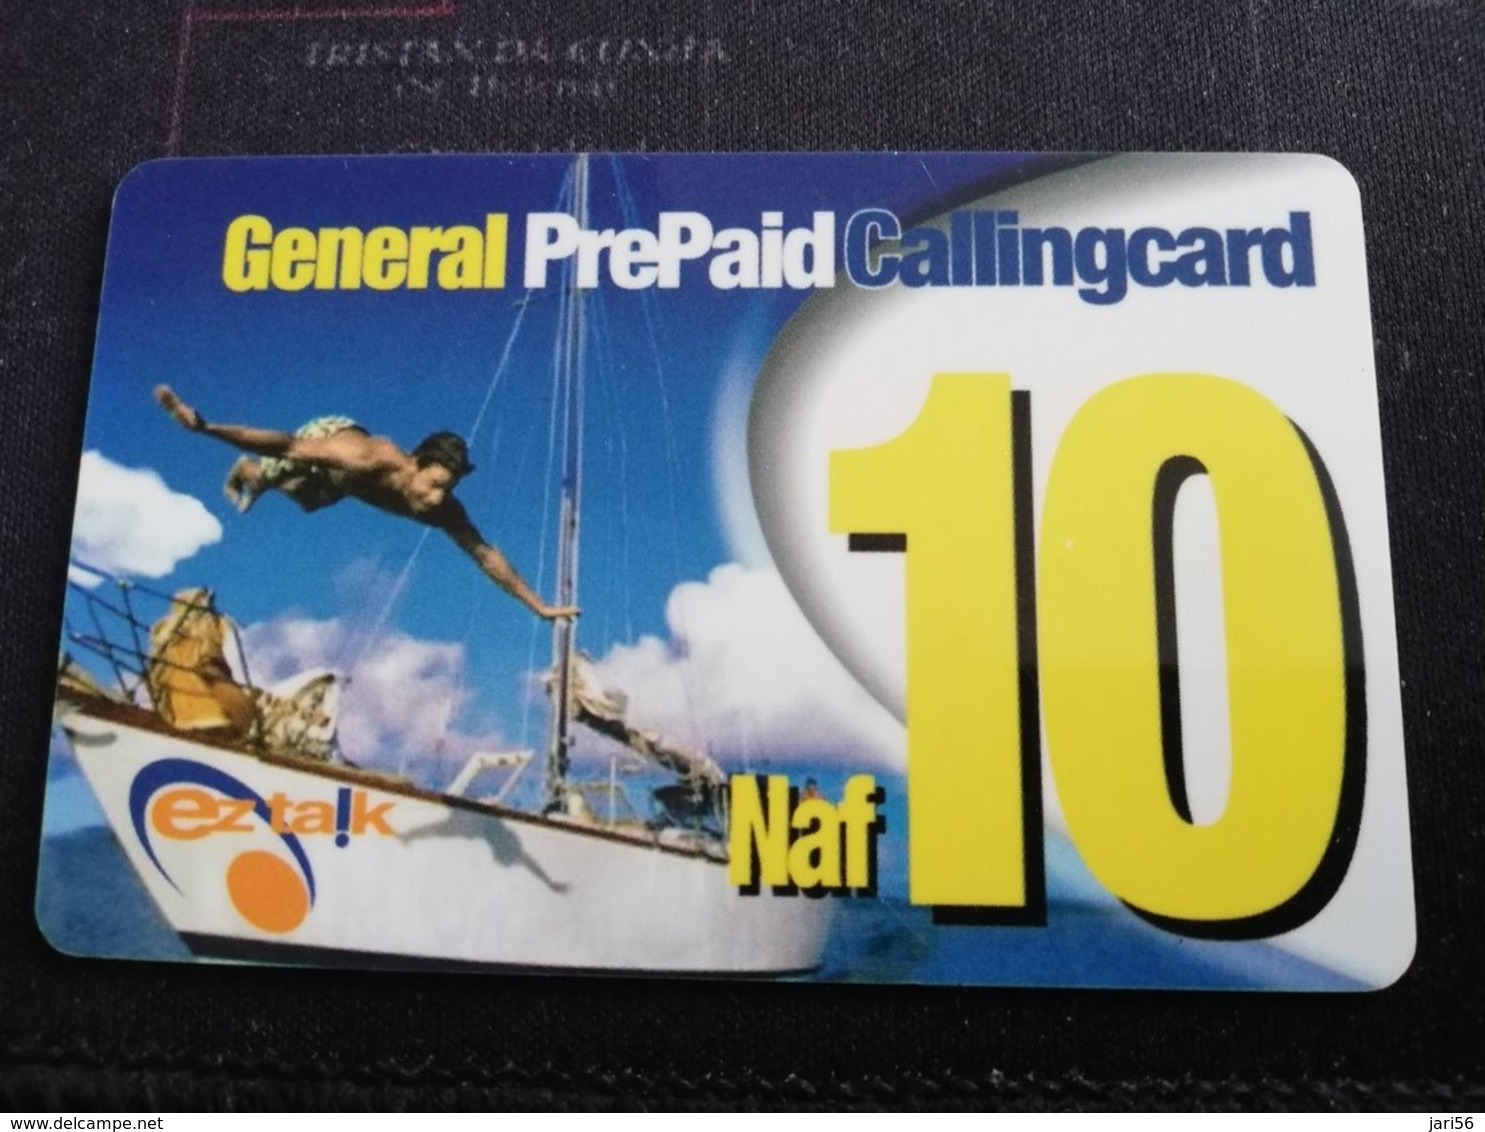 CURACAO NAF 10  GENERAL PREPAID CALLINGCARD, EZ TALK  THICK CARD     ** 957** - Antillen (Nederlands)